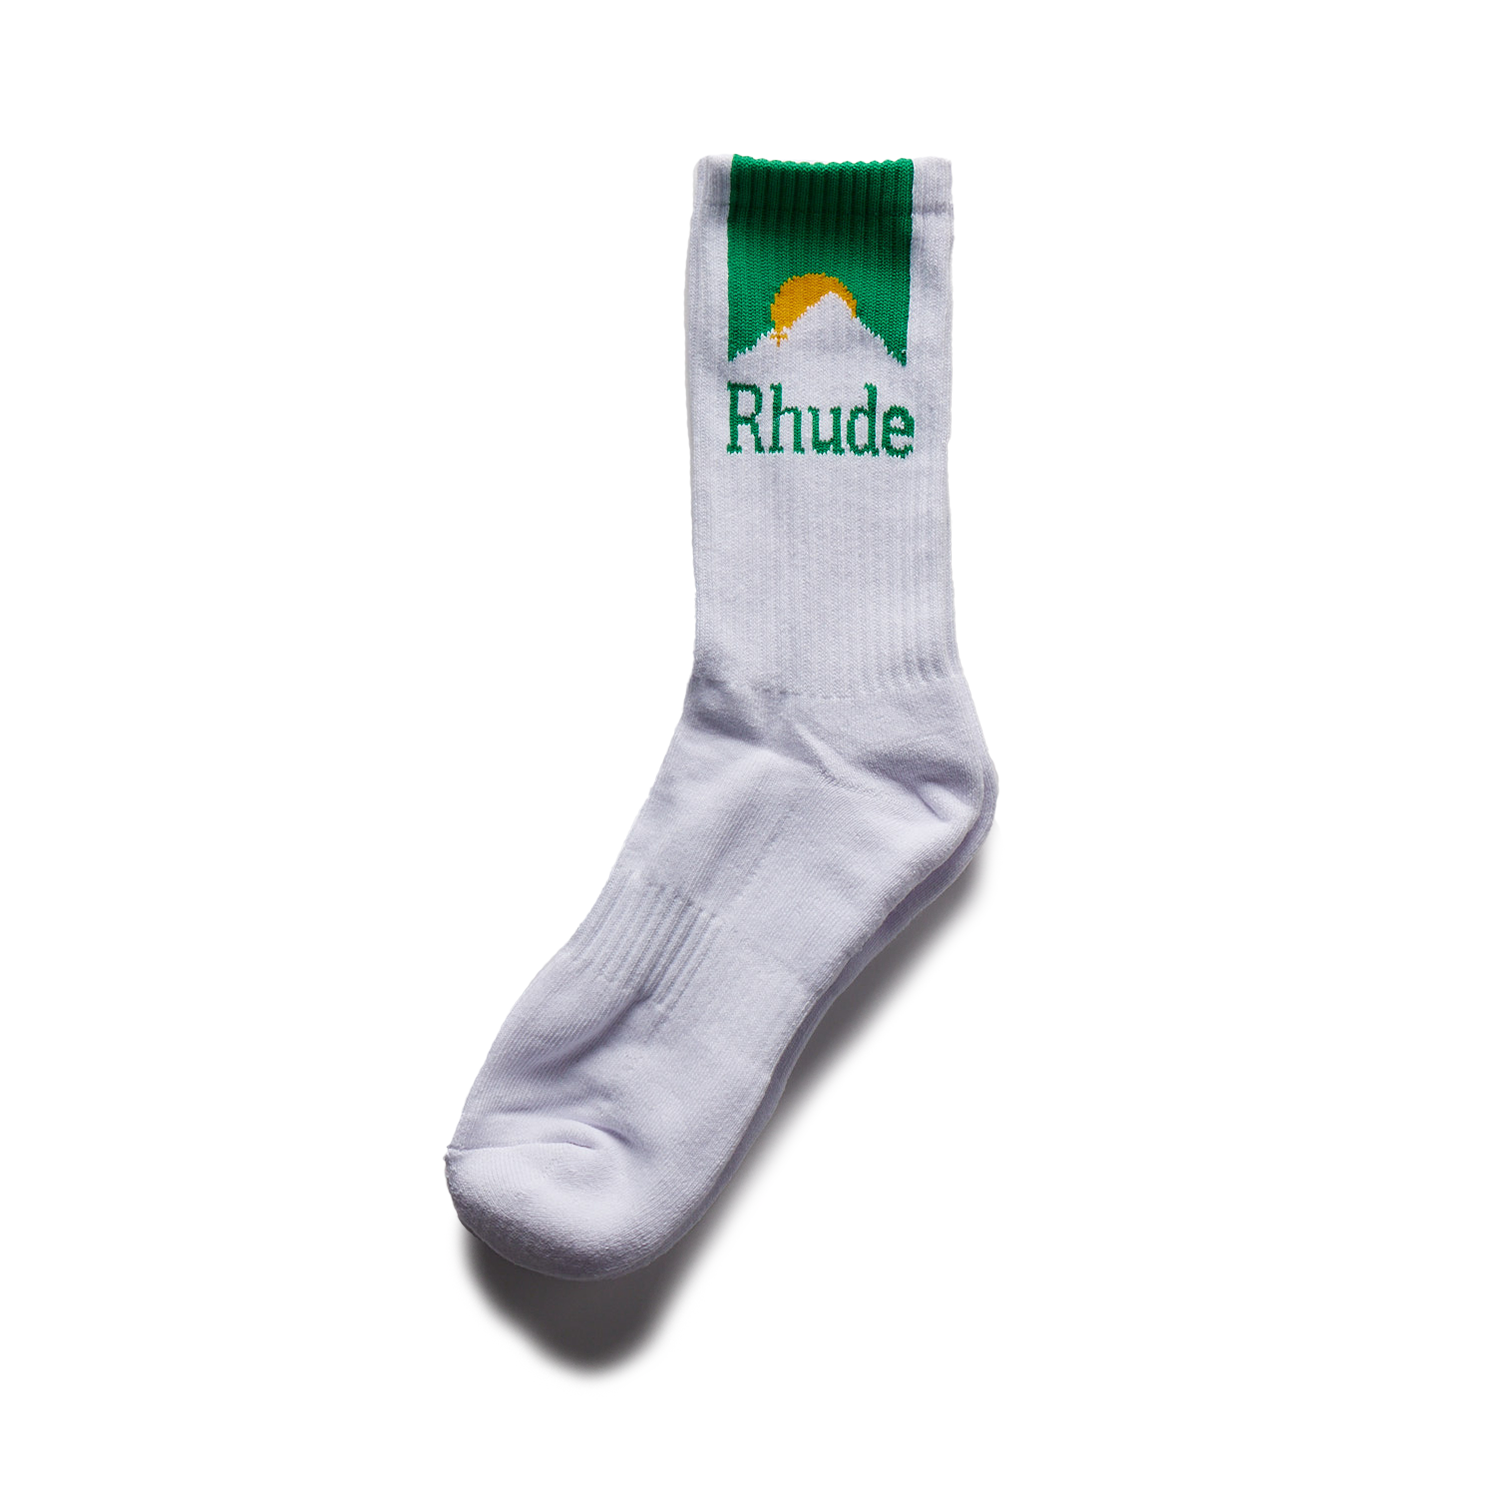 RHUDE - Moonlight Sock (White/Green/Yellow) product image